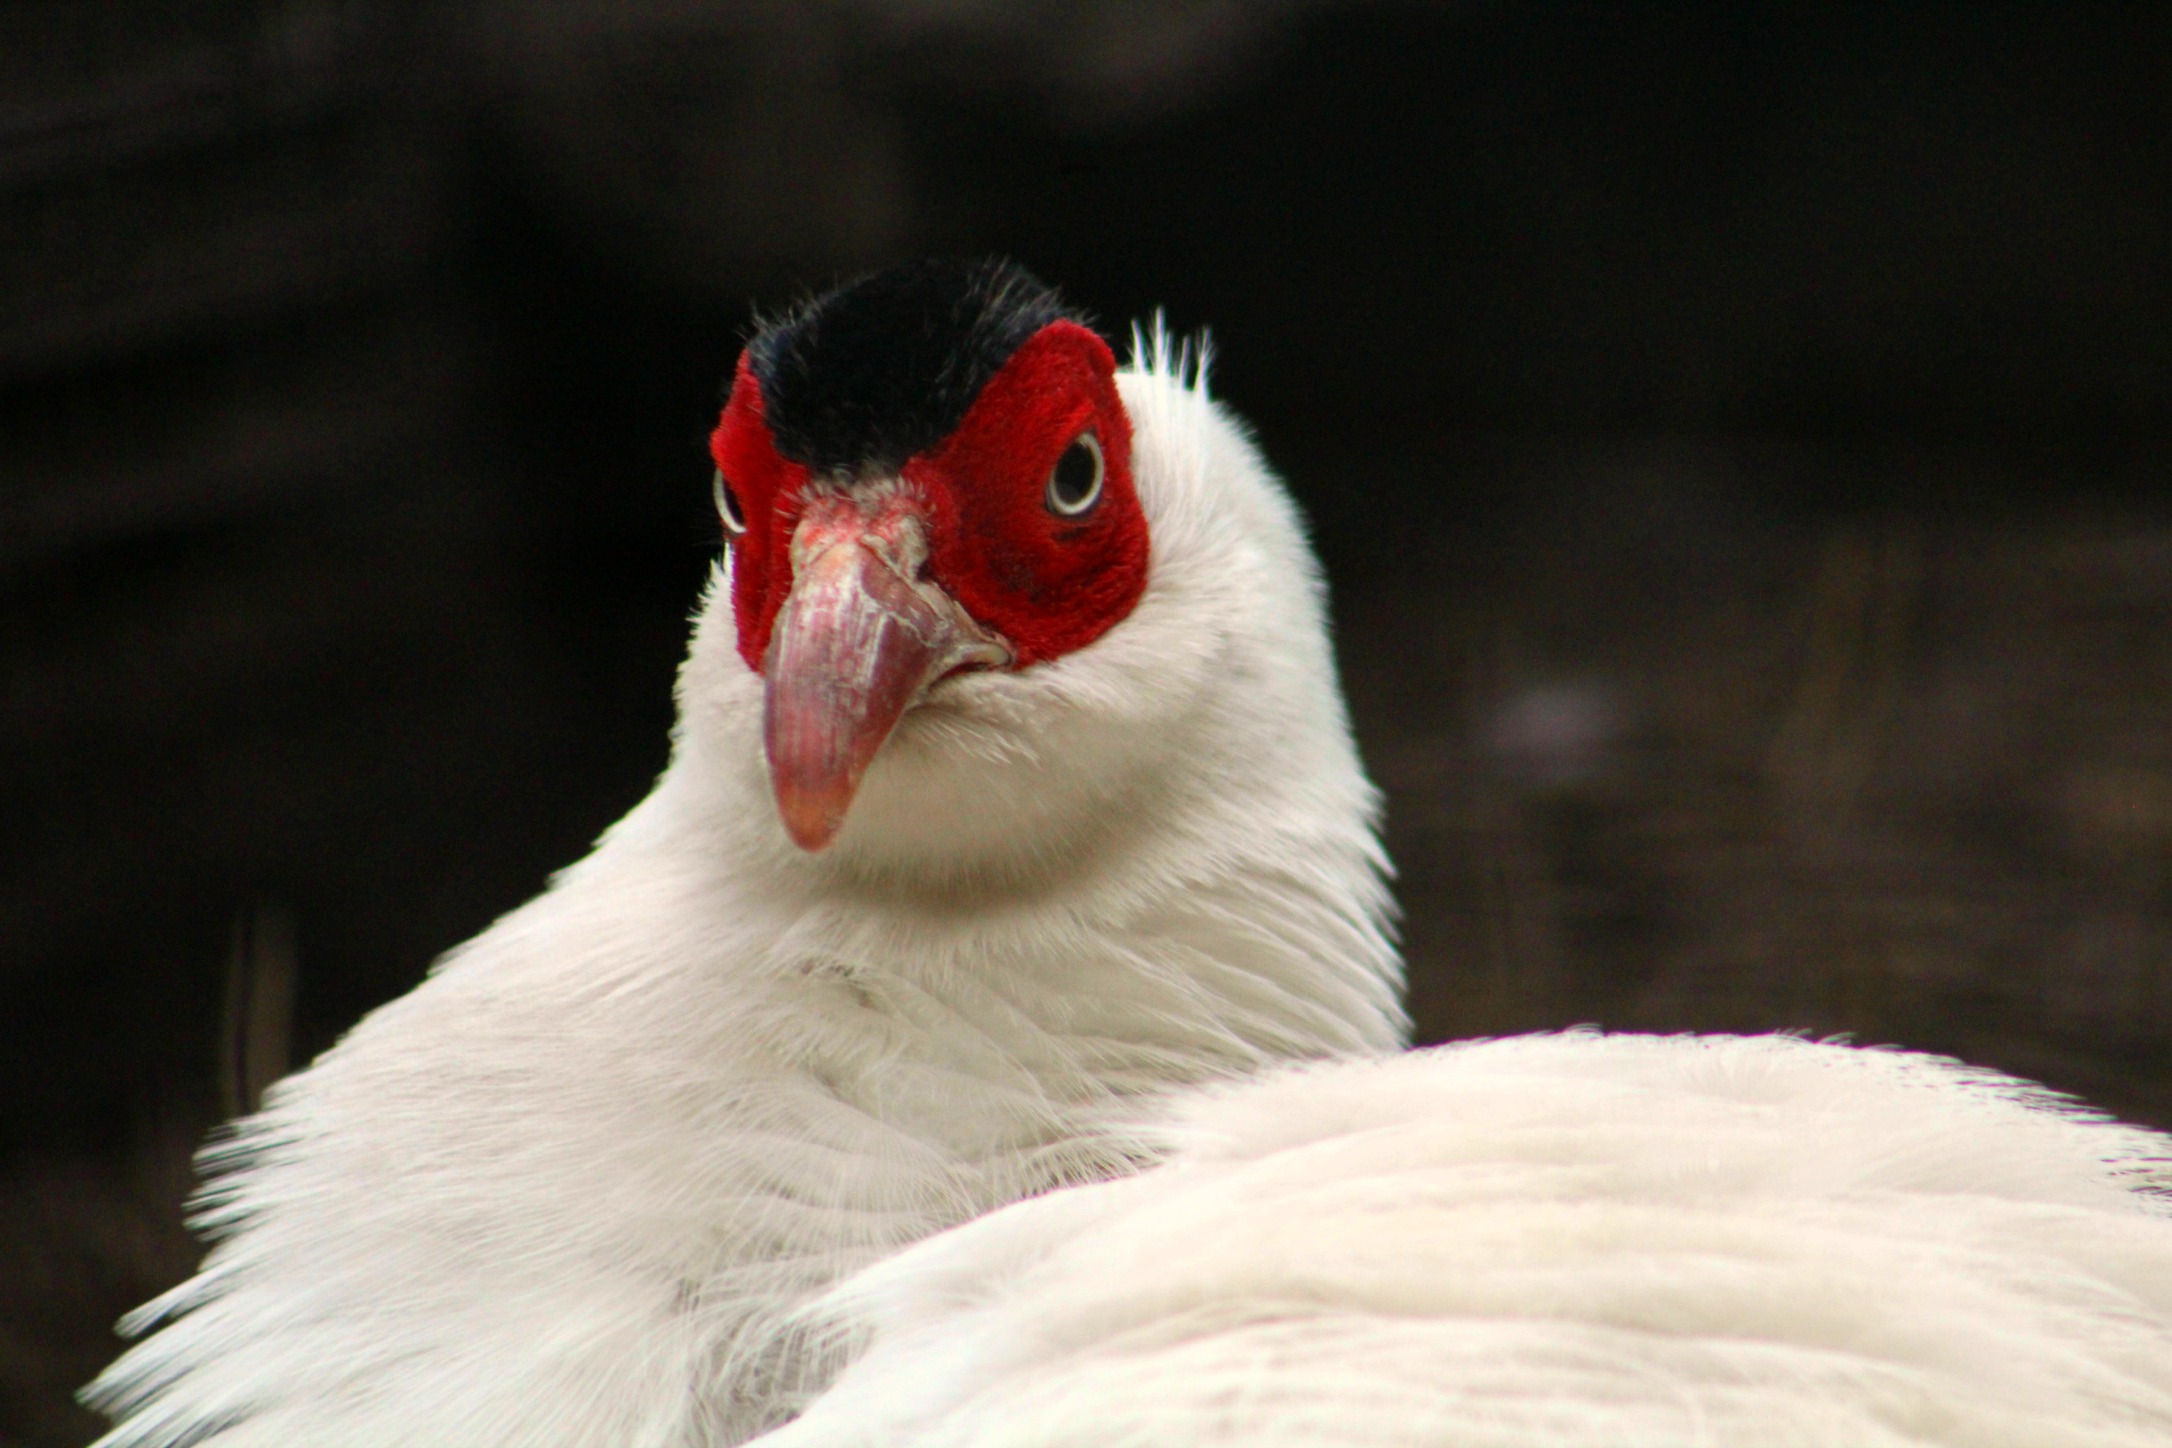 White Eared Pheasant